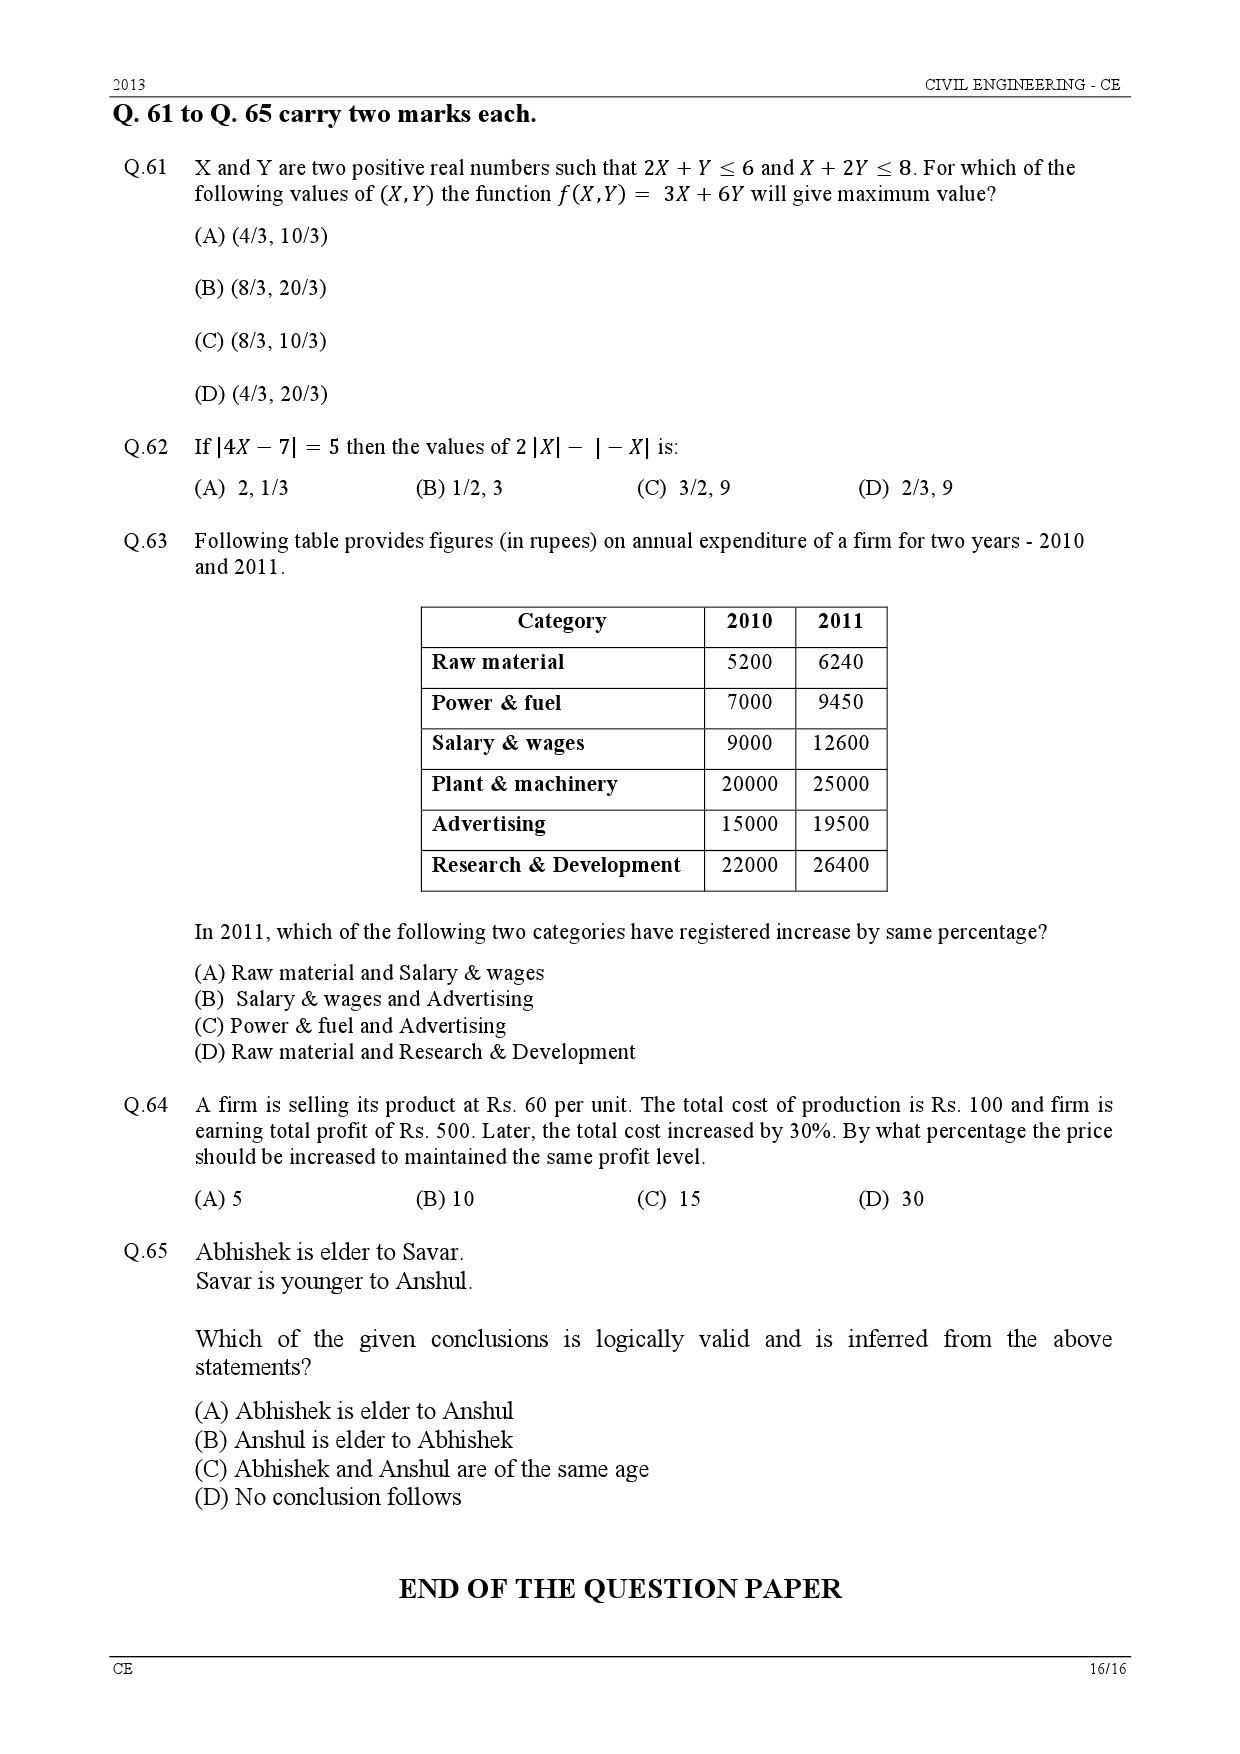 GATE Exam Question Paper 2013 Civil Engineering 16